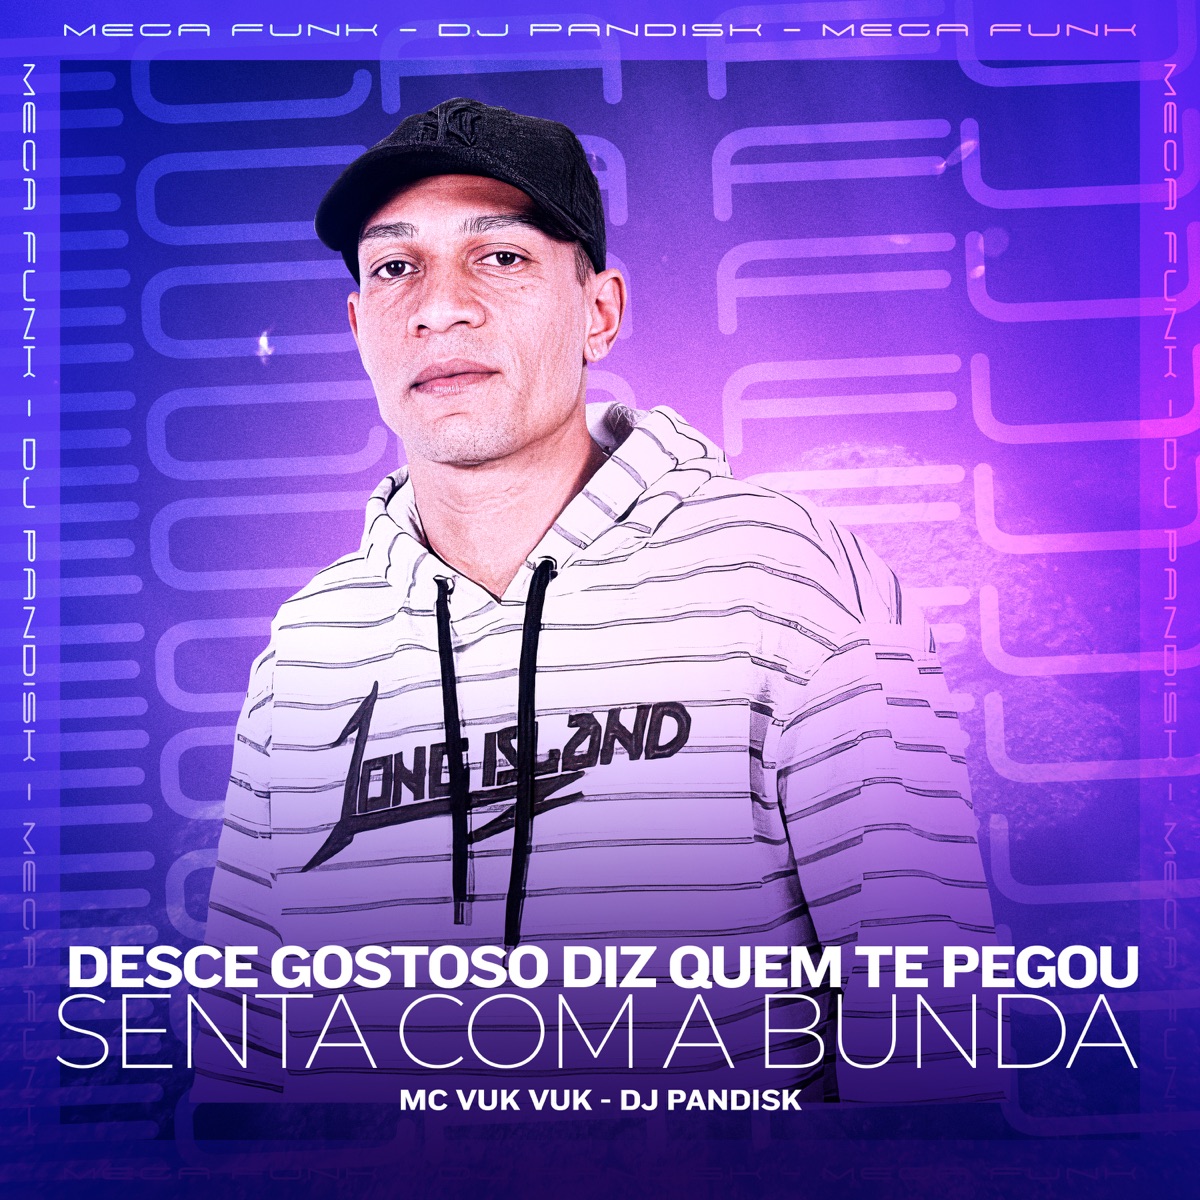 É Só Um Lance Lero Lero – música e letra de DJ Dozabri, DJ Arana, Silva Mc,  MC Luiggi, Meno Saaint